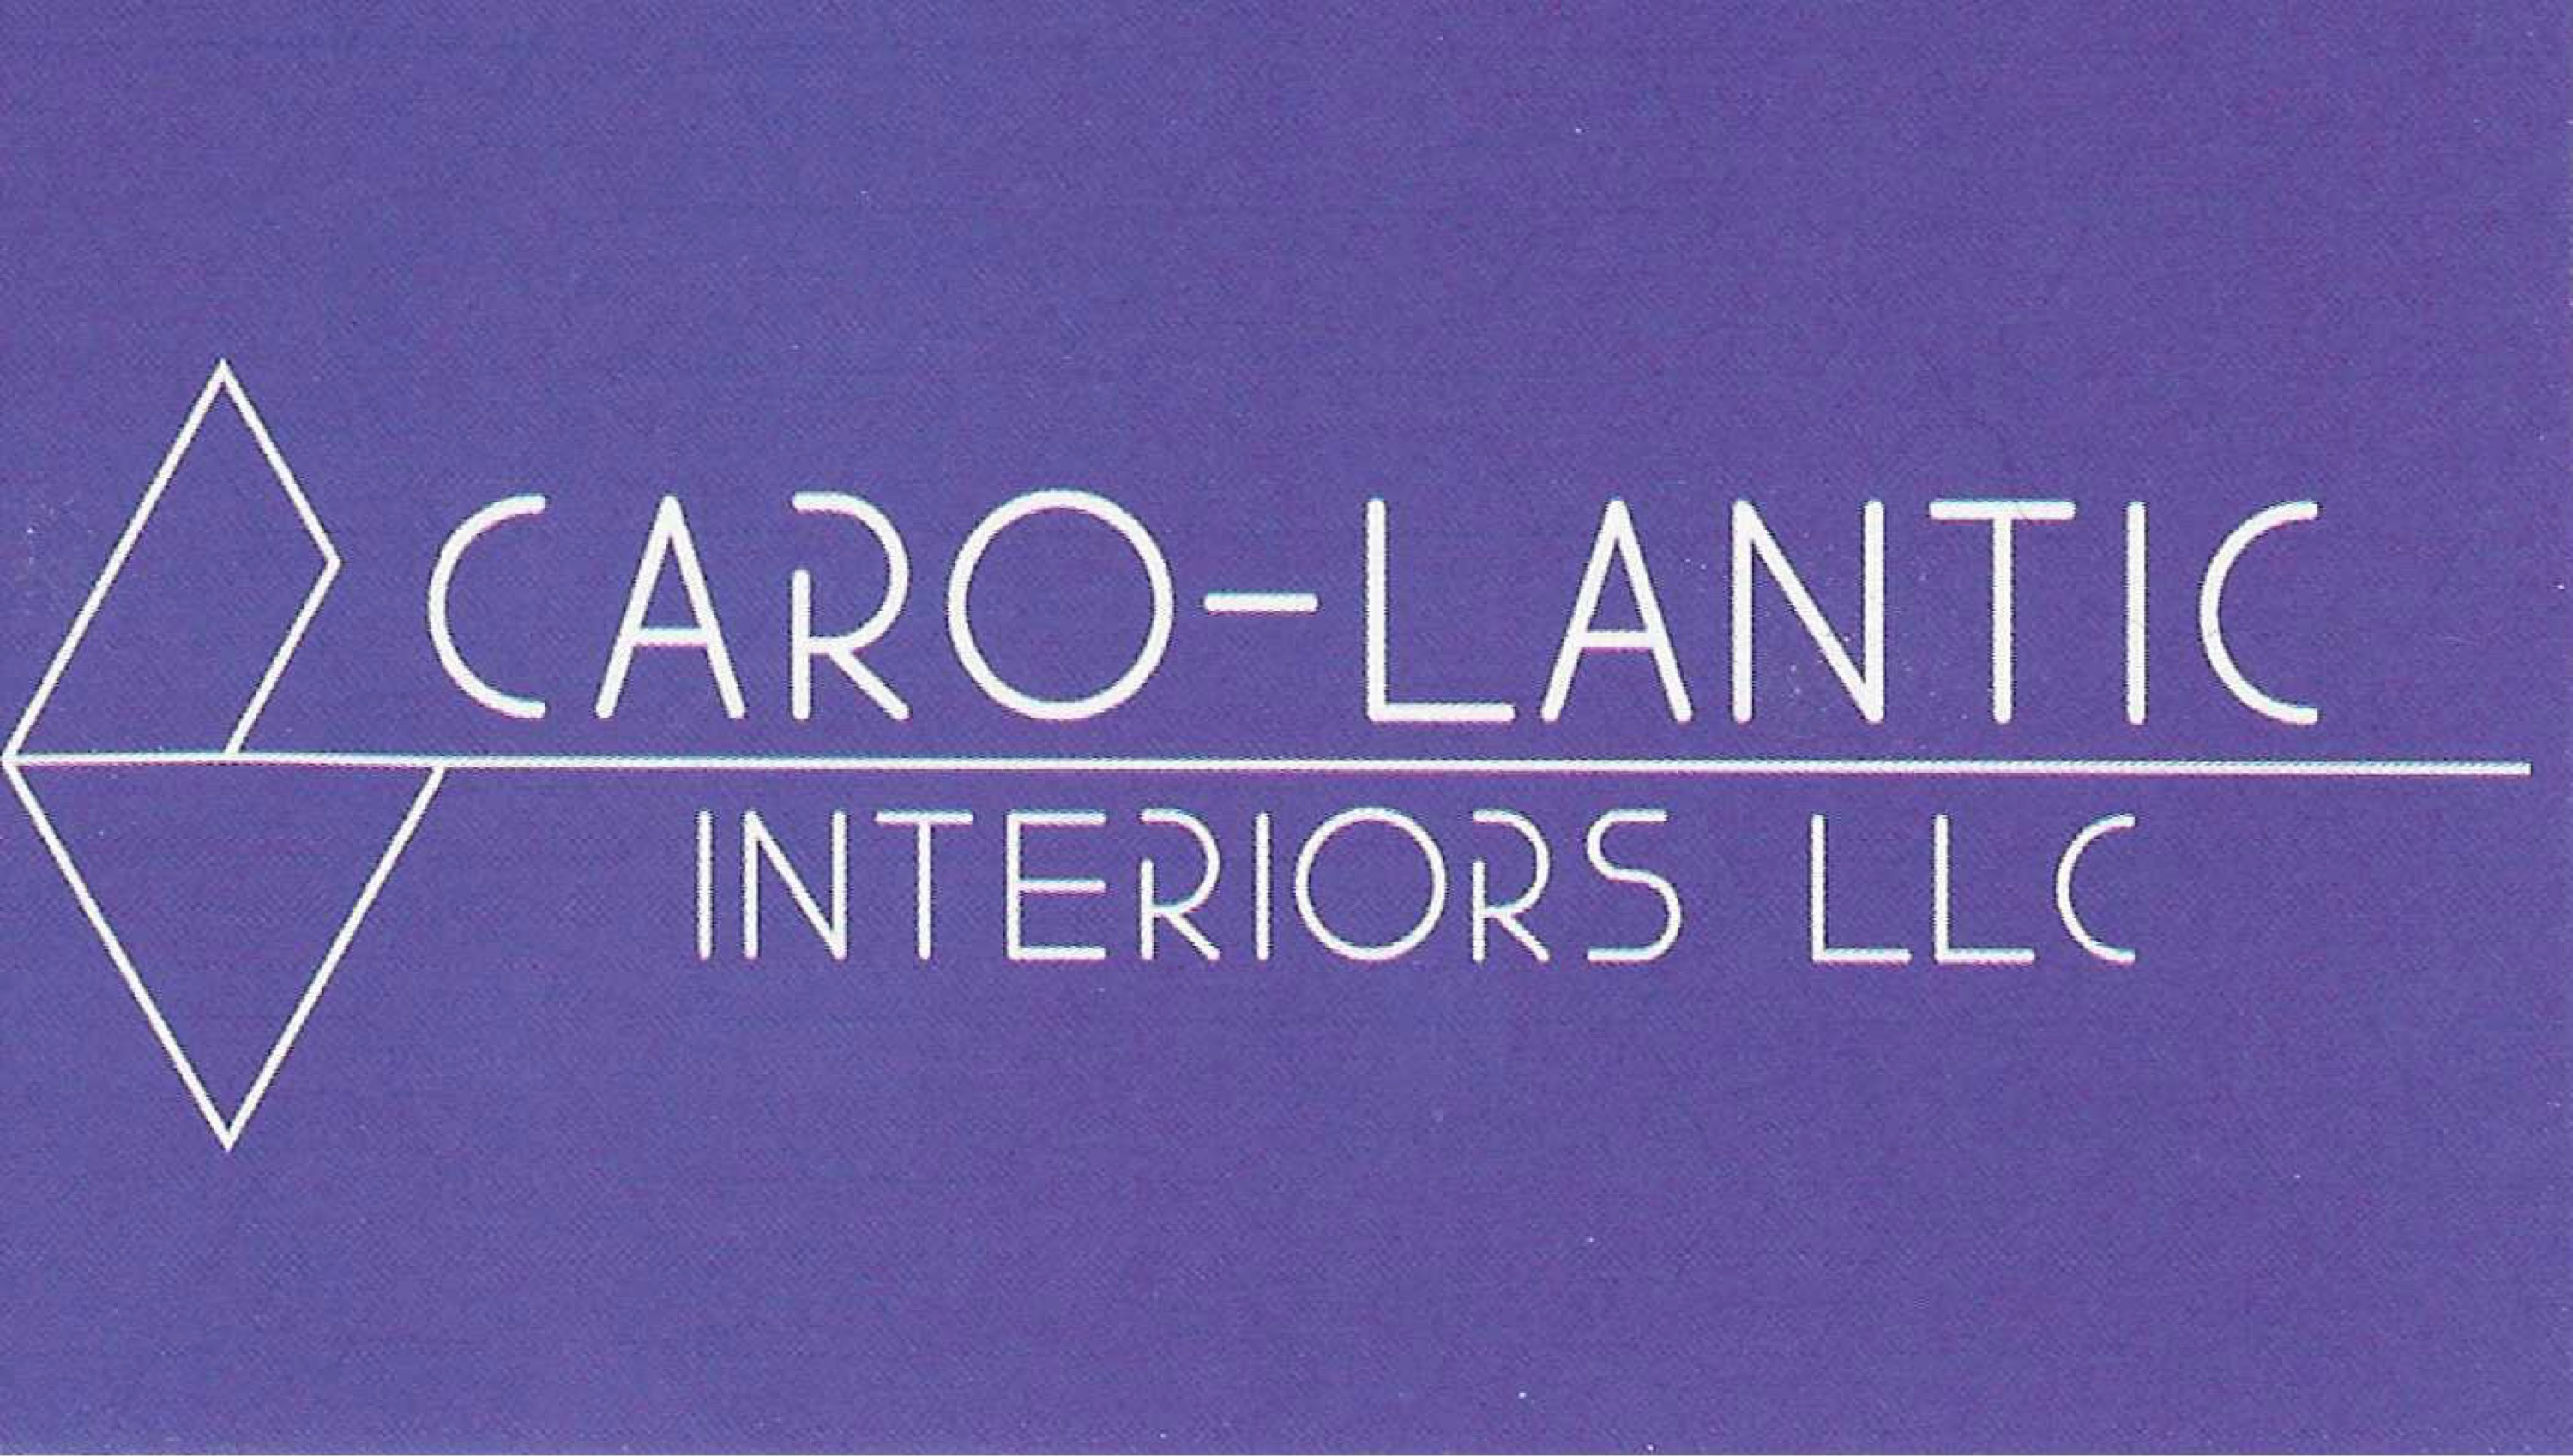 Caro-lantic Interiors Logo